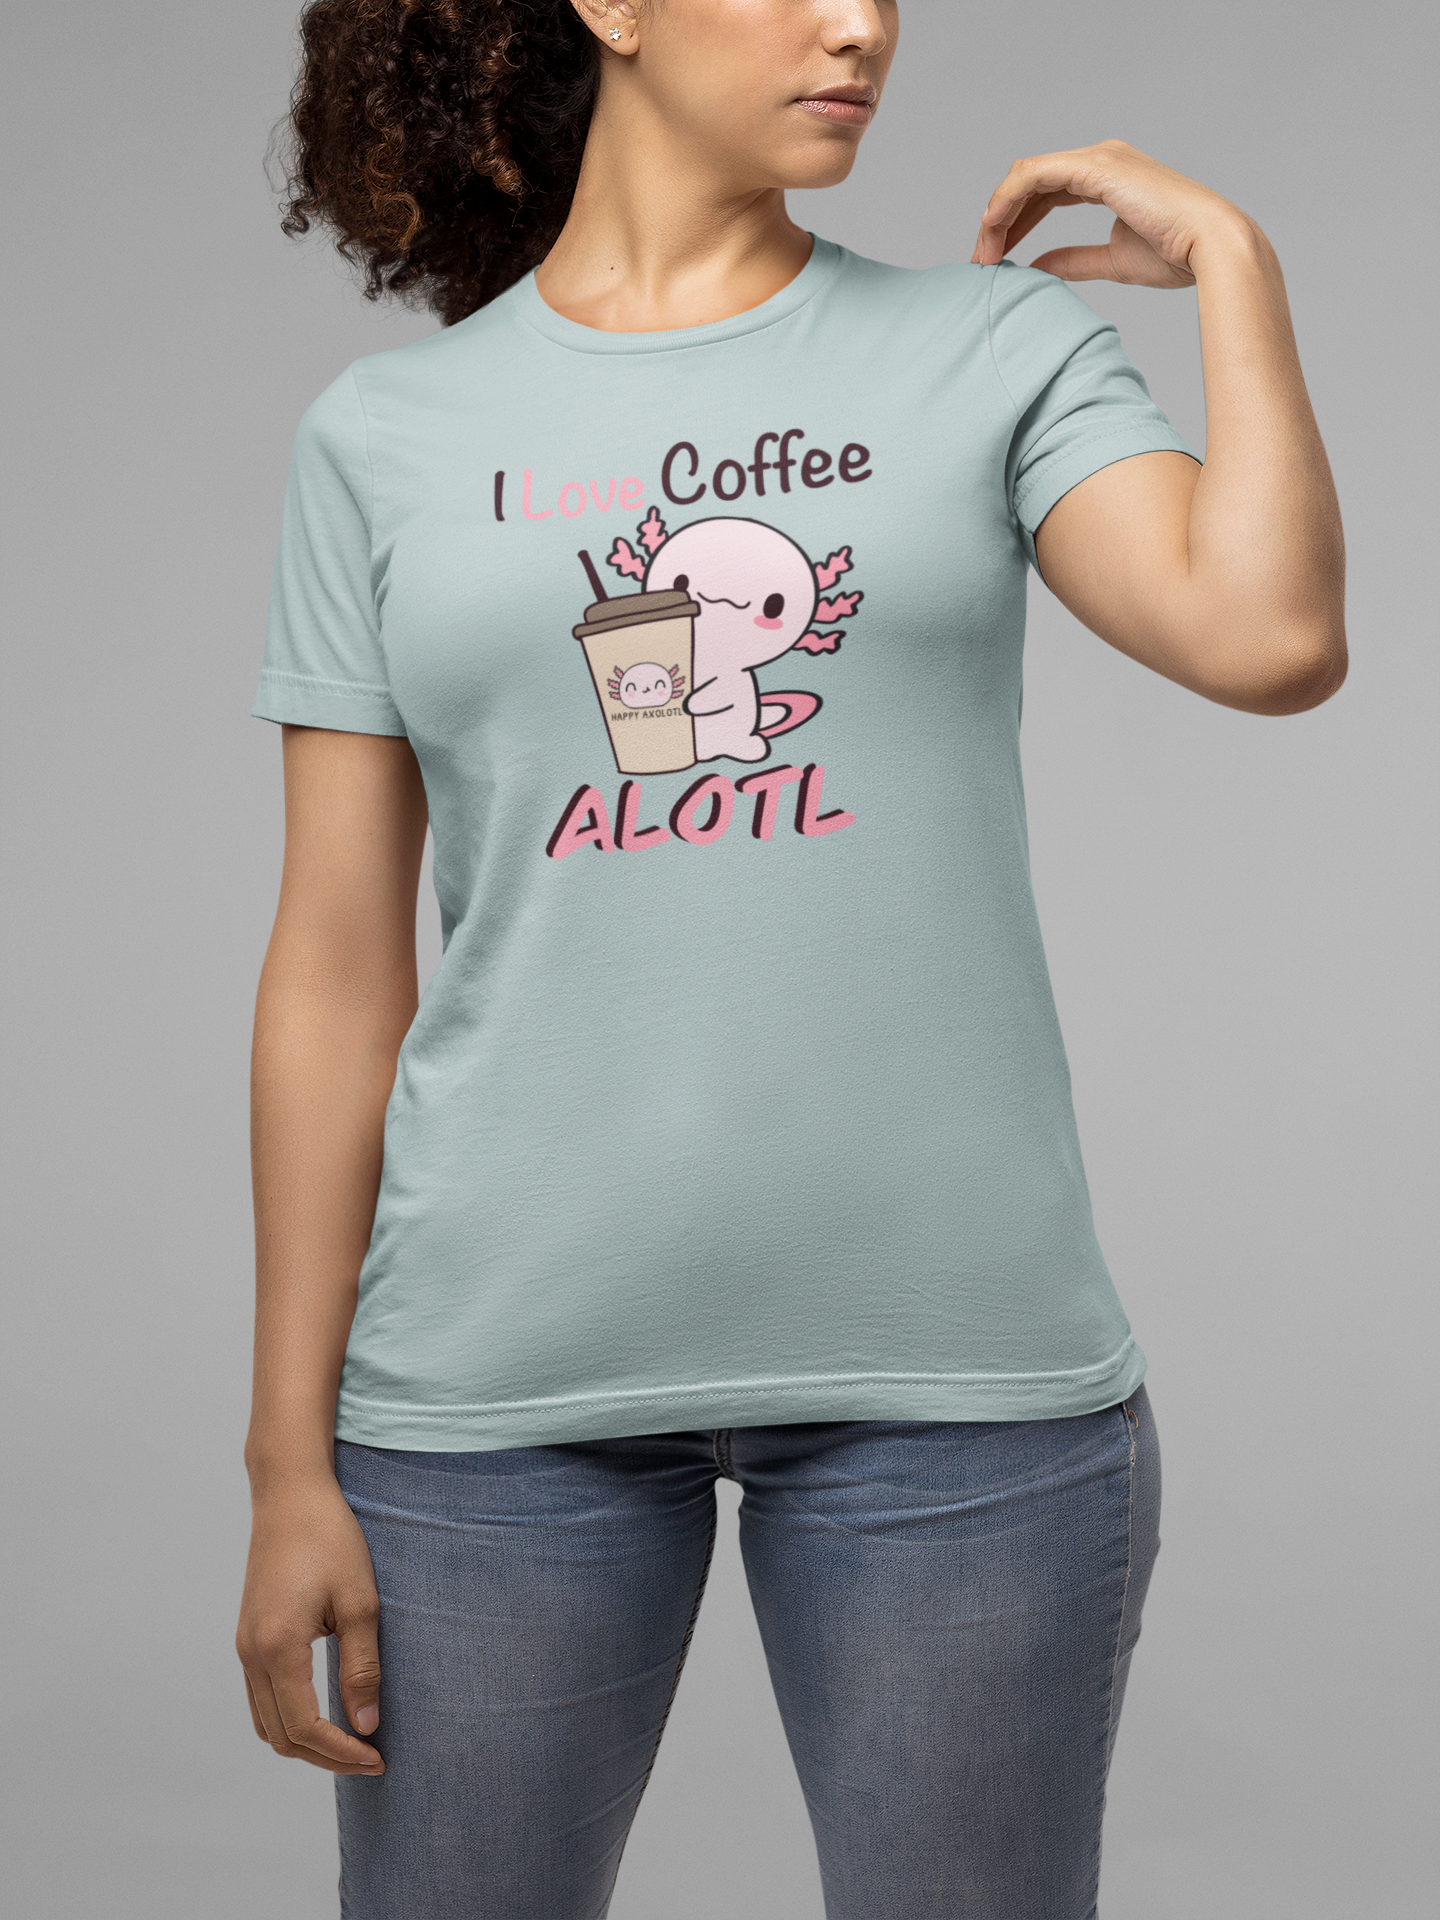 I Love Coffee Alotl T-Shirt